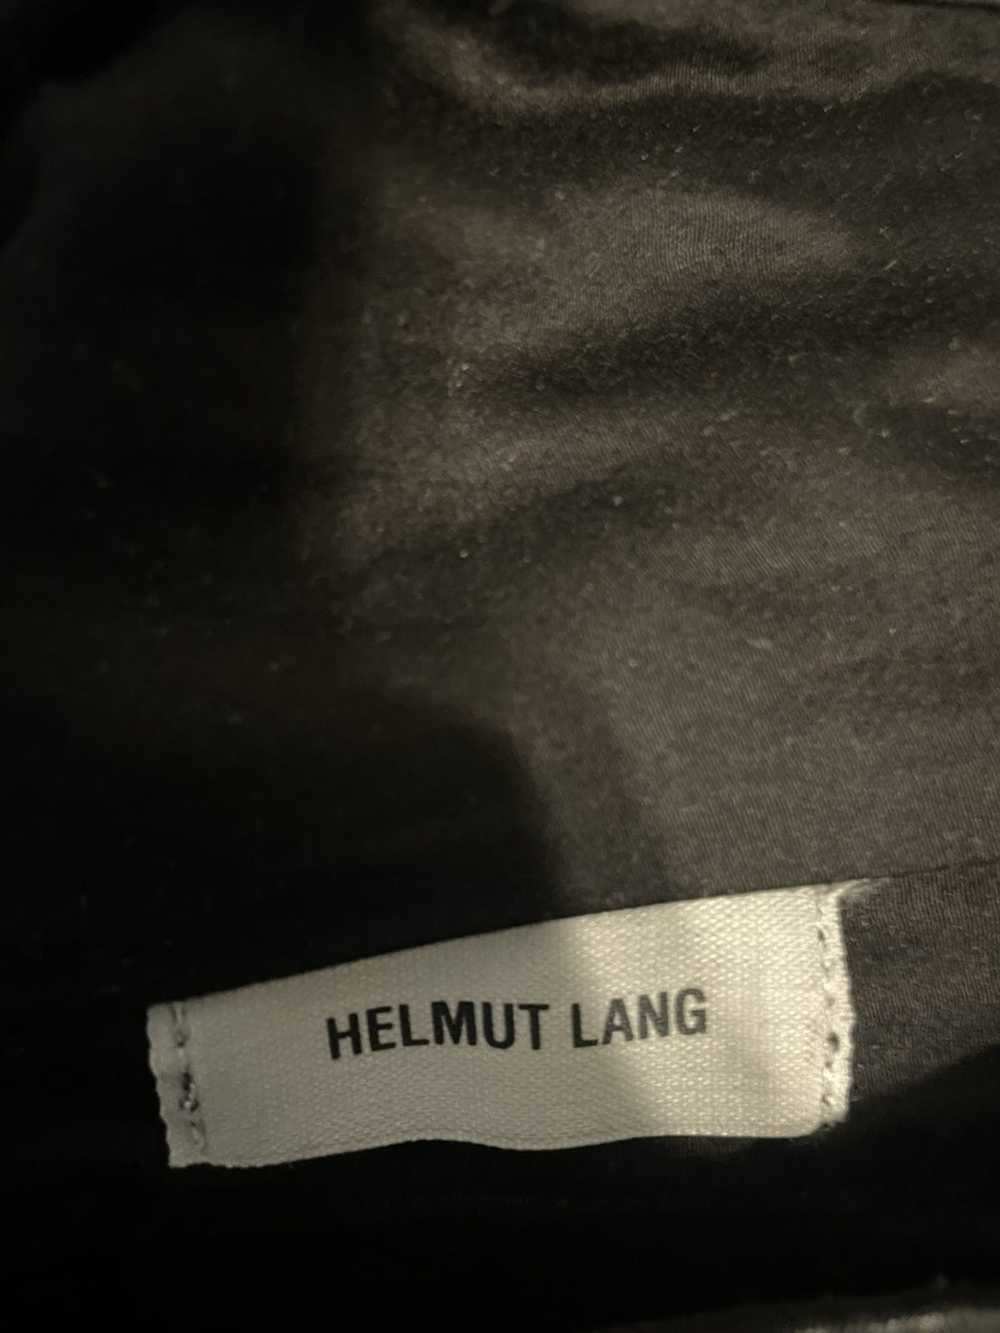 Helmut Lang Helmut Lang Waxed Jeans - image 8